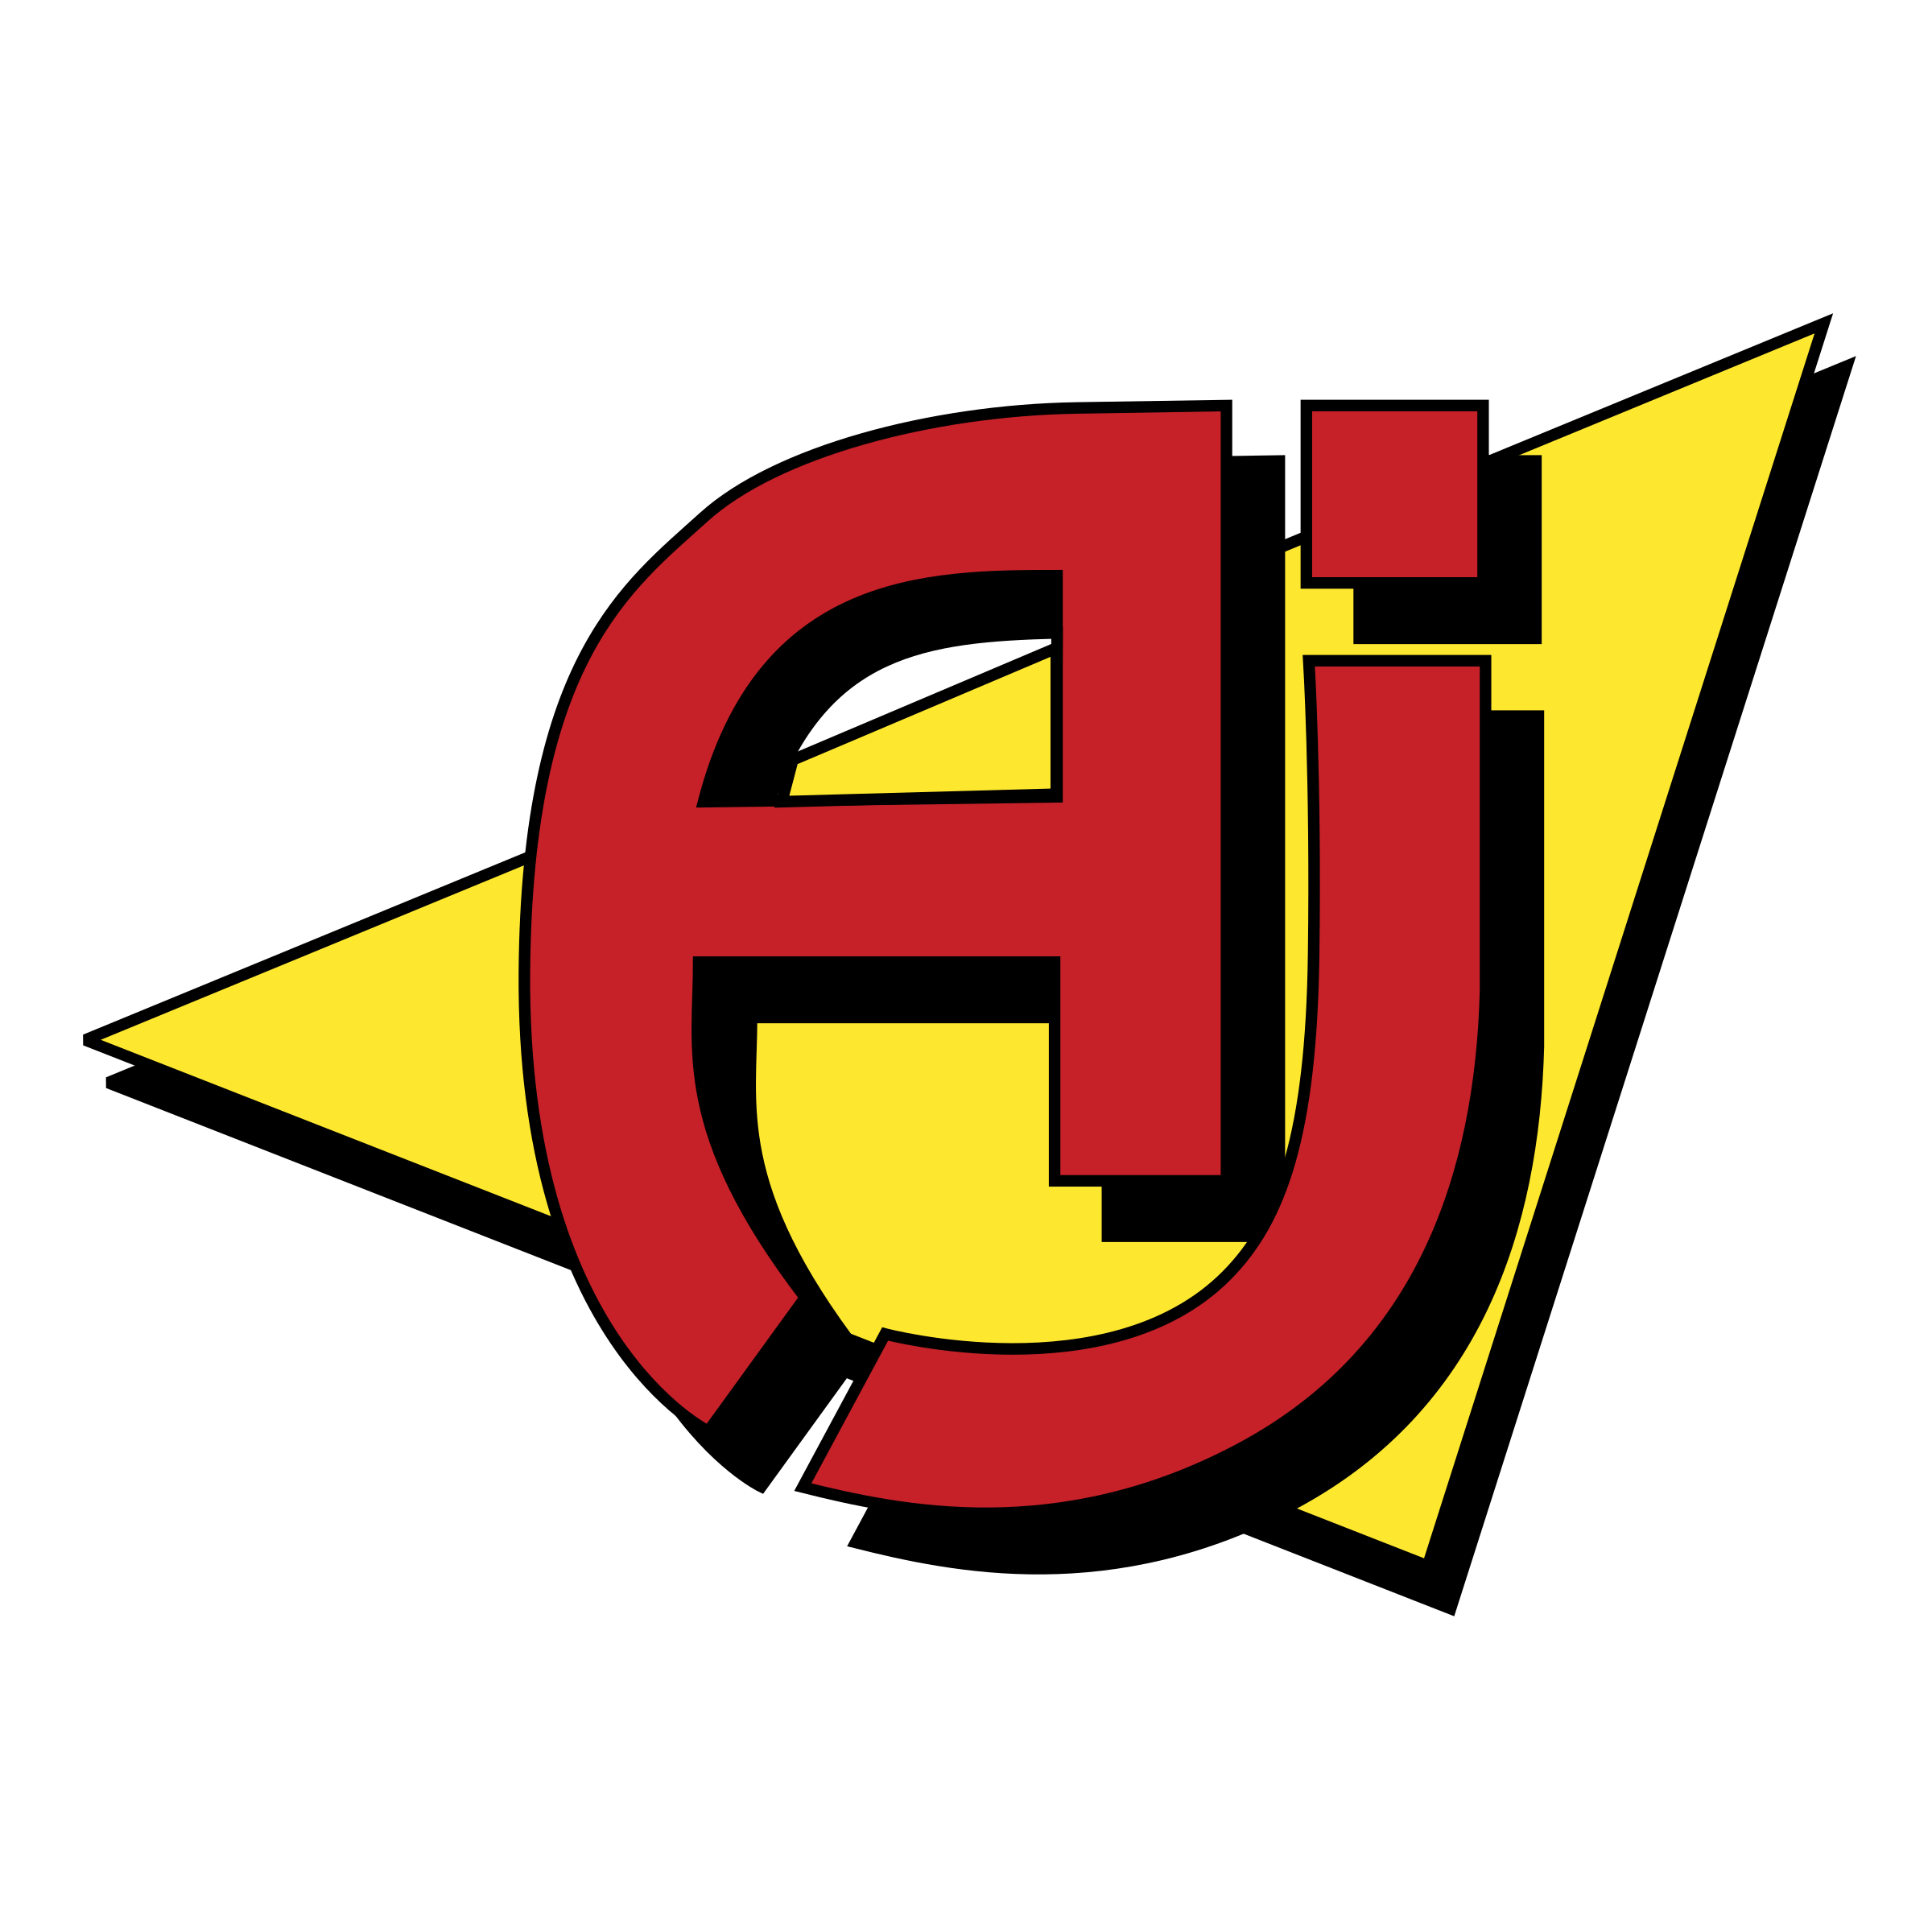 AJ Logo - AJ Logo PNG Transparent & SVG Vector - Freebie Supply